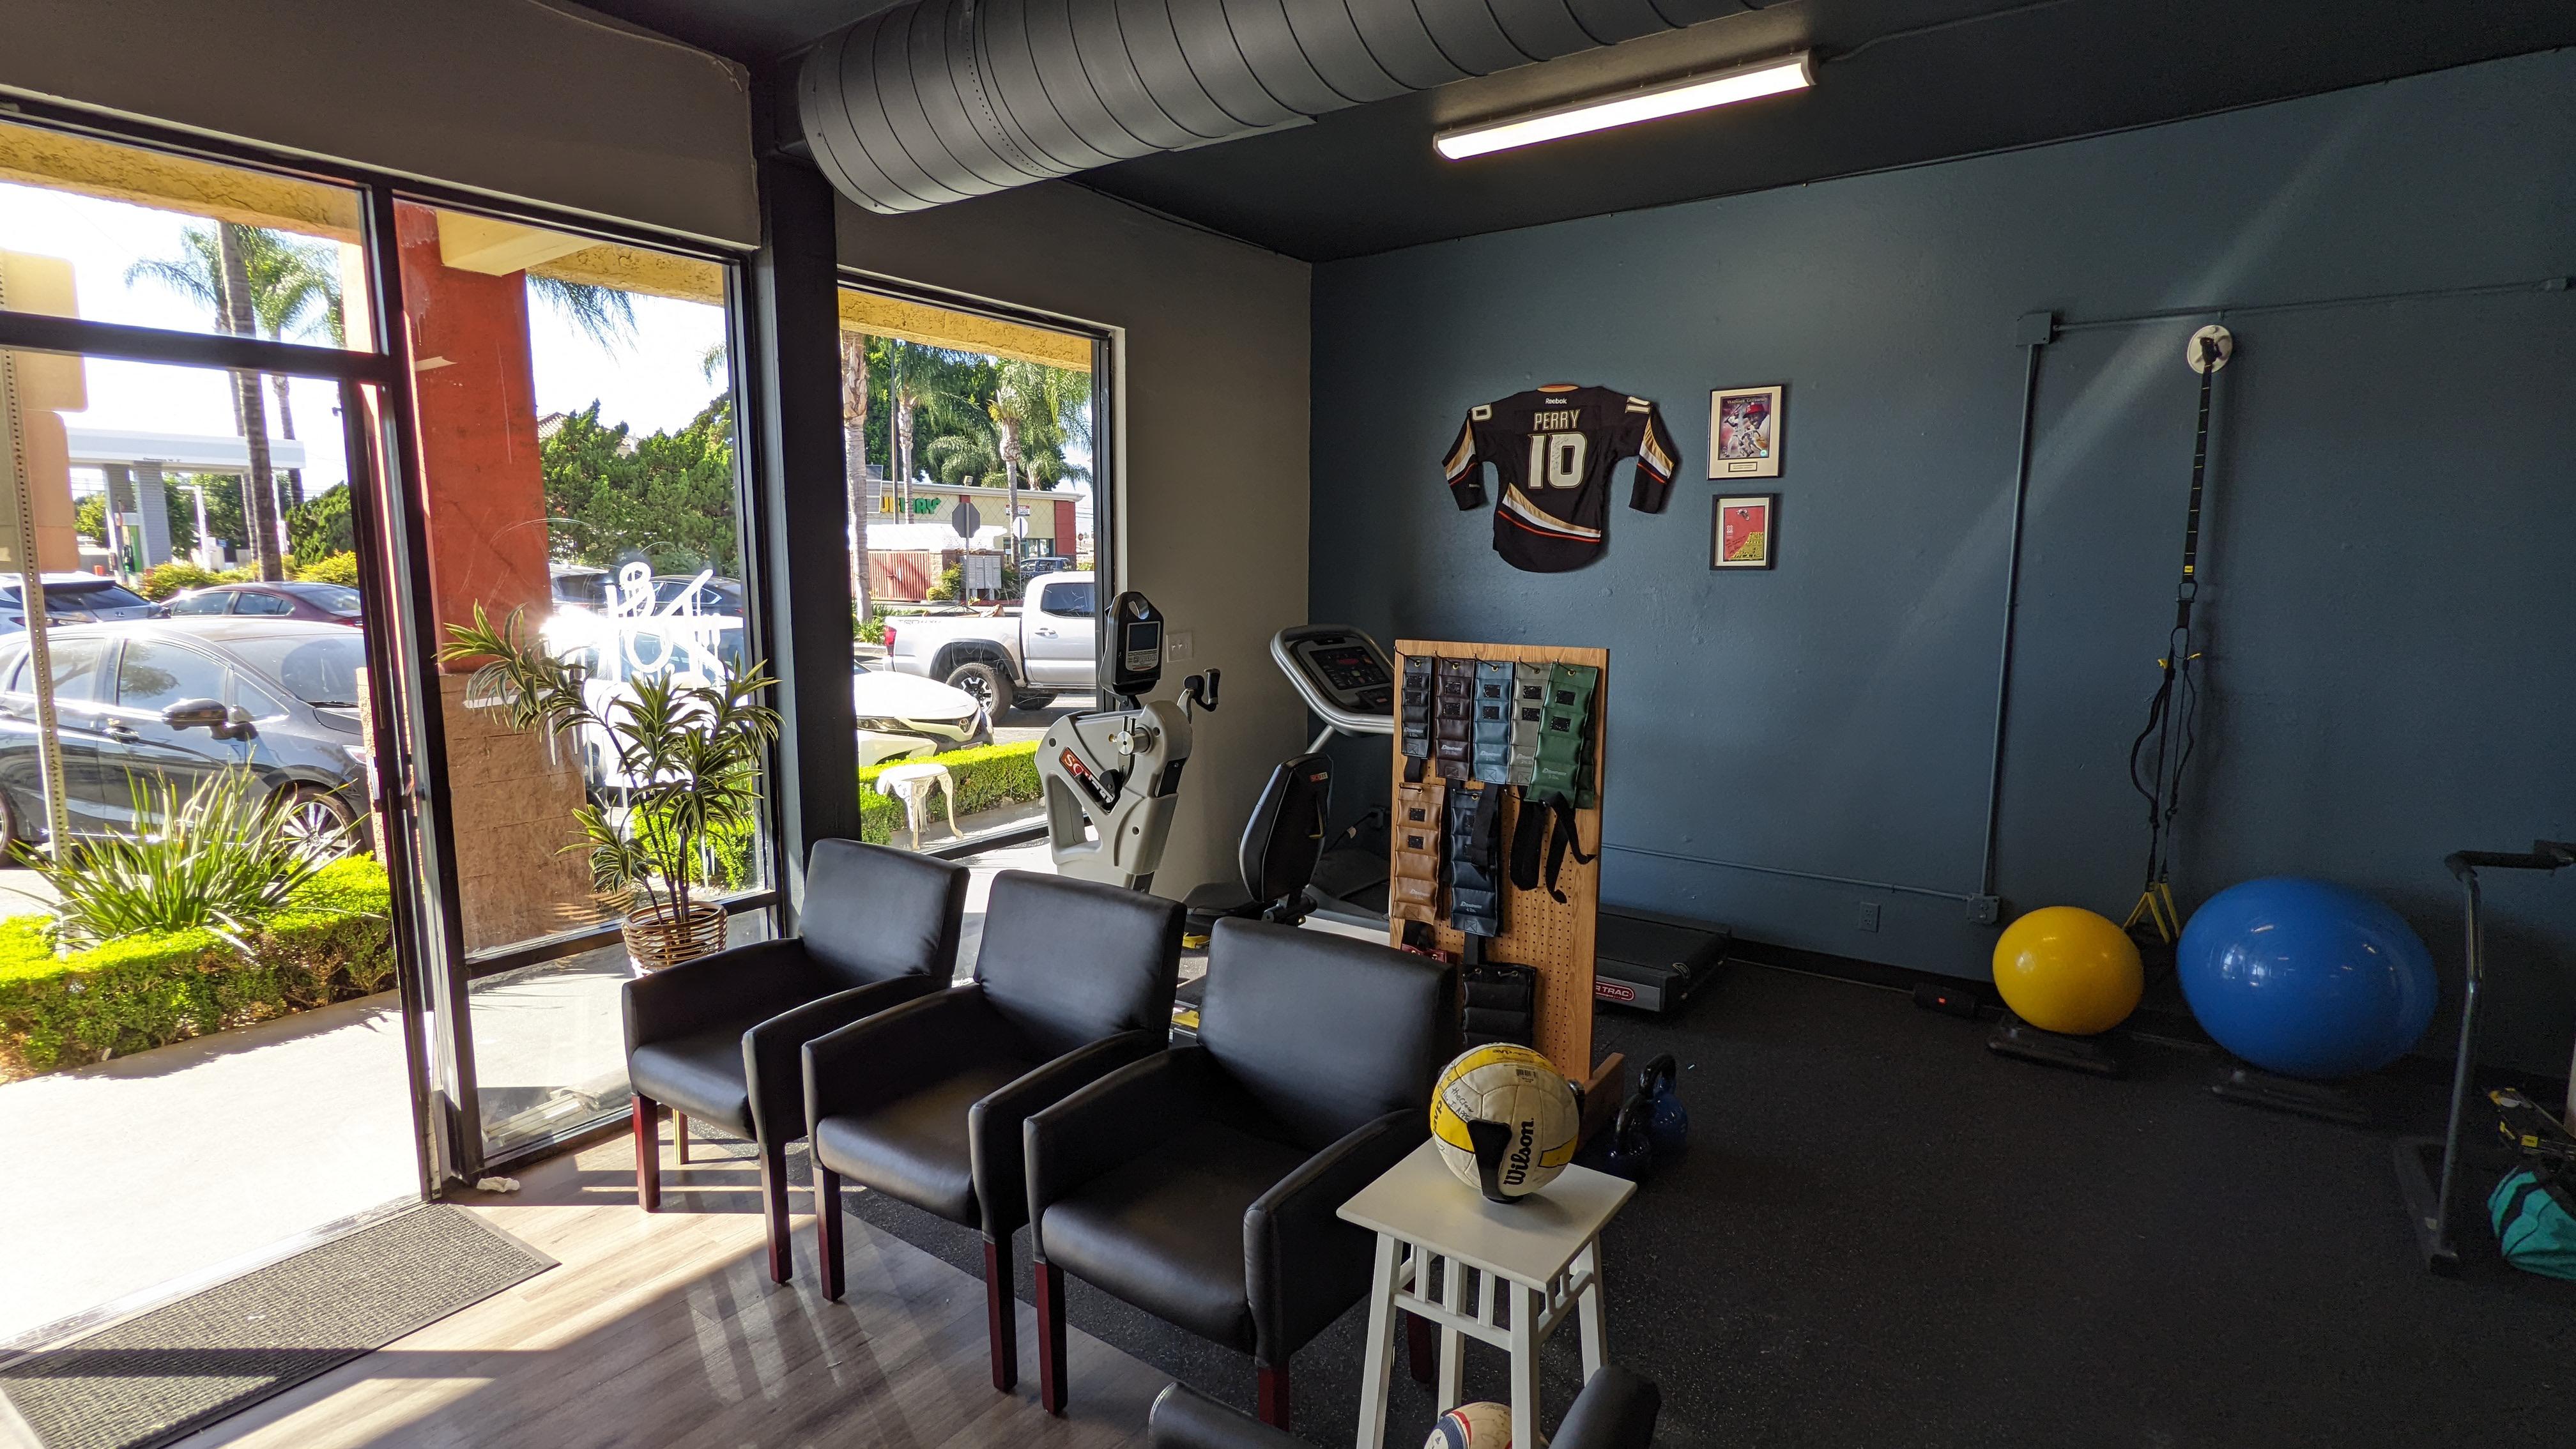 California Rehabilitation and Sports Therapy - Baldwin Park 
14135 Francisquito Ave Ste 100
Baldwin Park, CA 91706